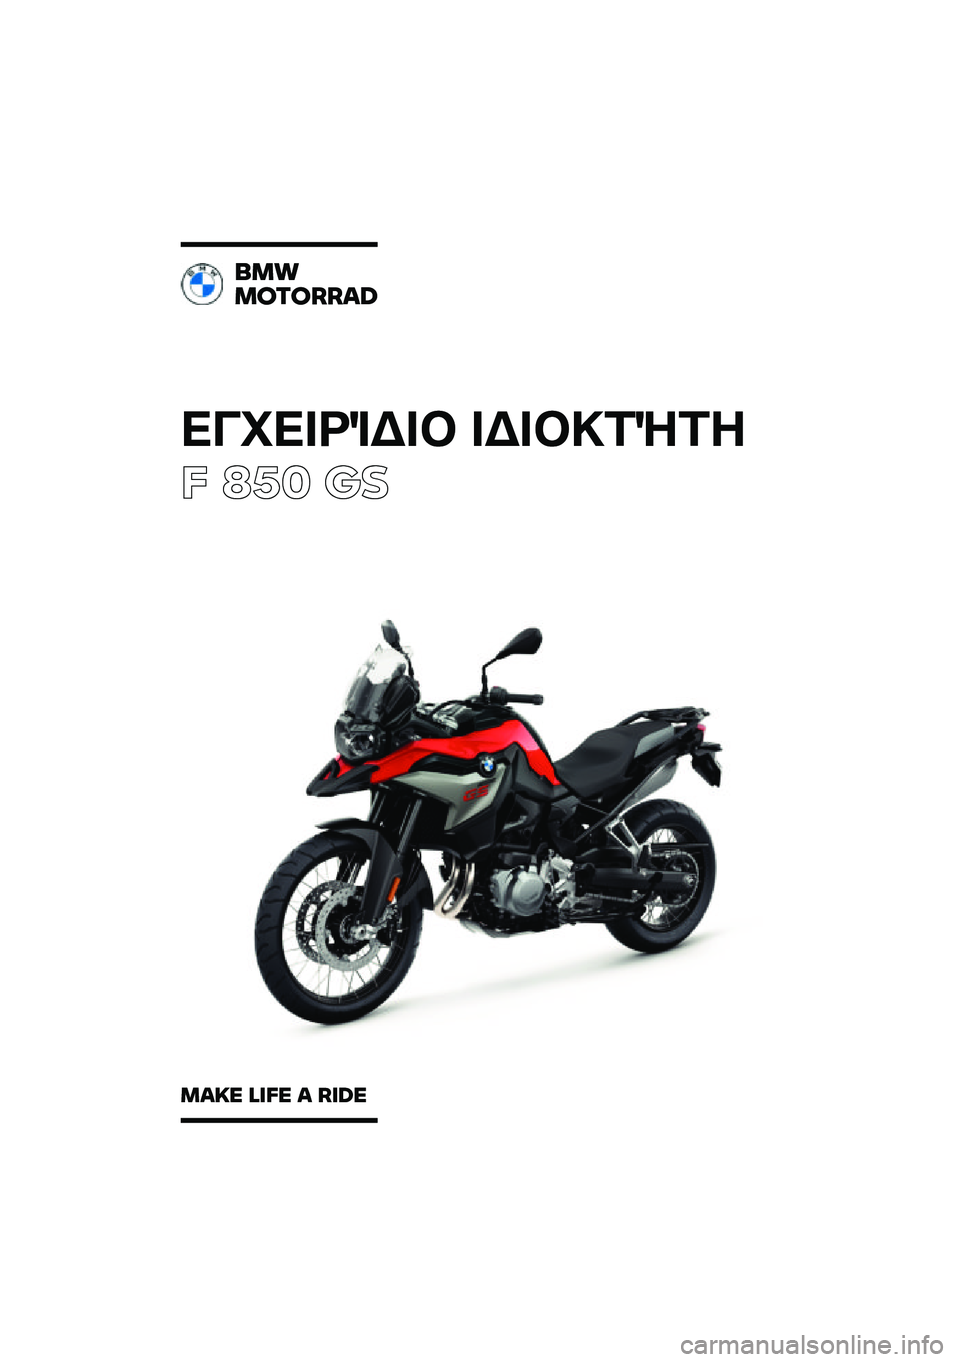 BMW MOTORRAD F 850 GS 2021  Εγχειρίδιο ιδιοκτήτη (in Greek) ��������\b��	 ��\b��	�
��\f��
� ��� �	�

���
�������\b�	
��\b�
� �\f�
�� �\b ��
�	� 